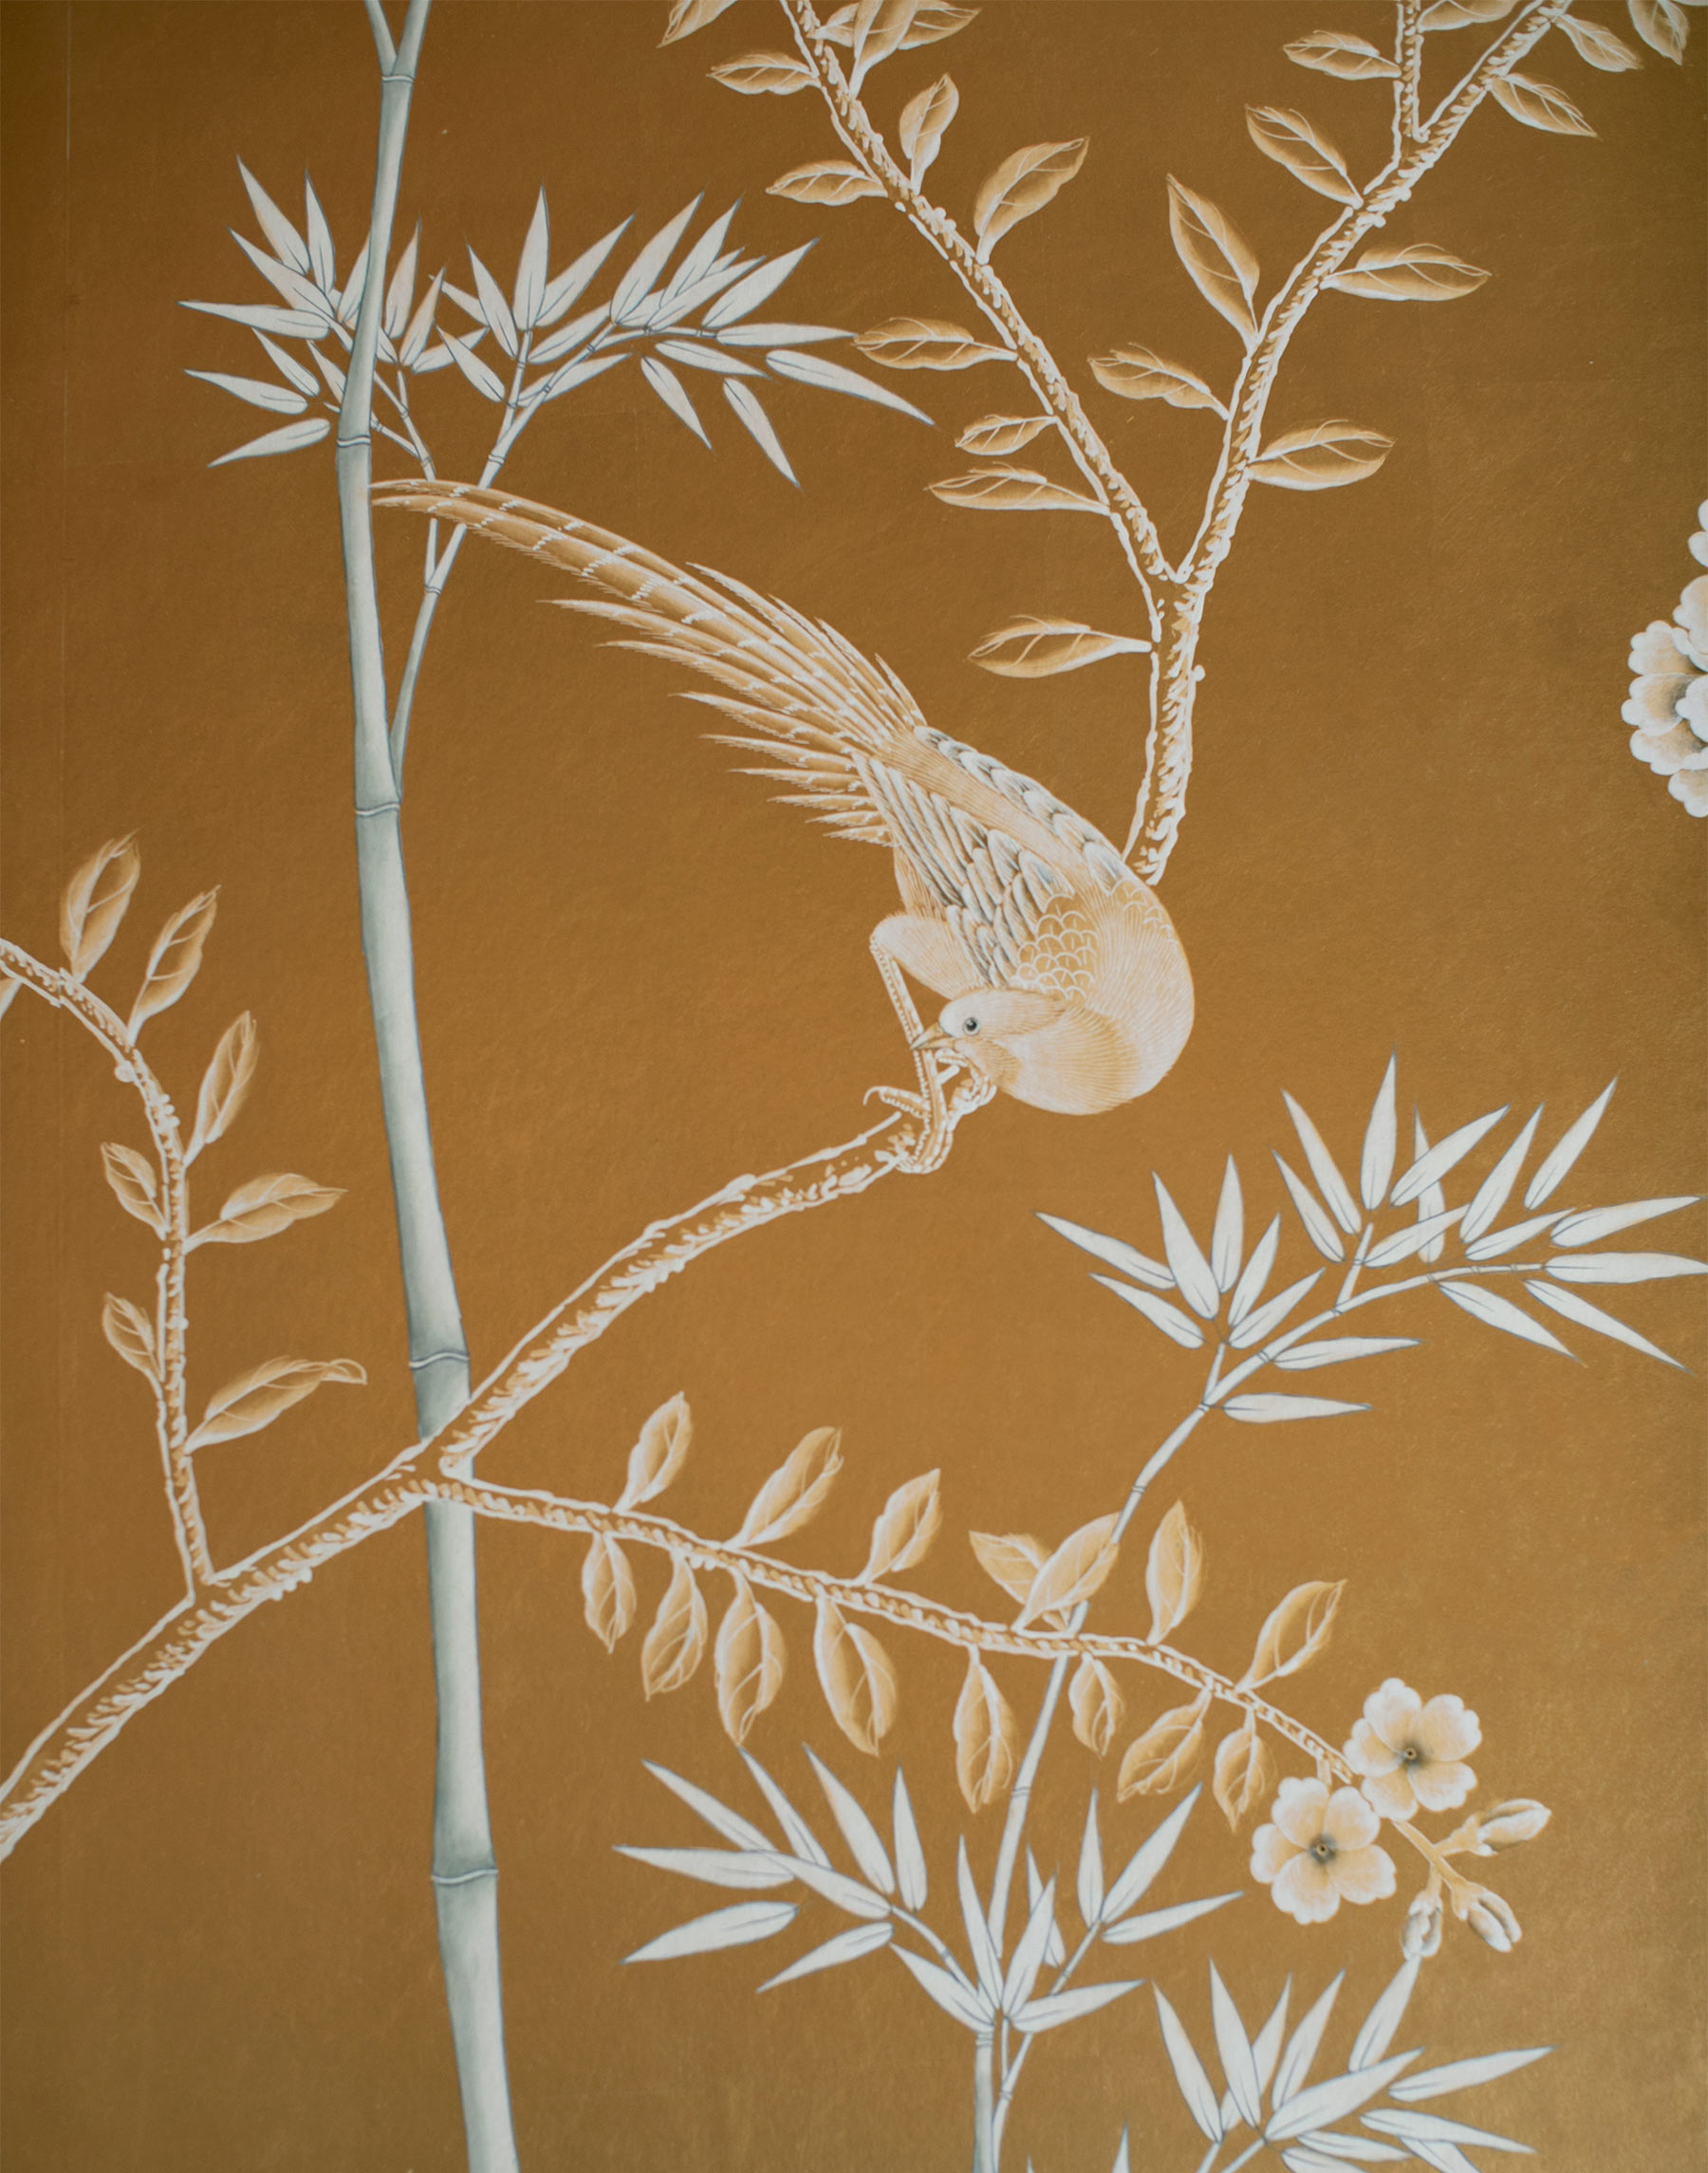 'Portobello' in Special Colourway SC-44 on Deep Rich Gold gilded paper